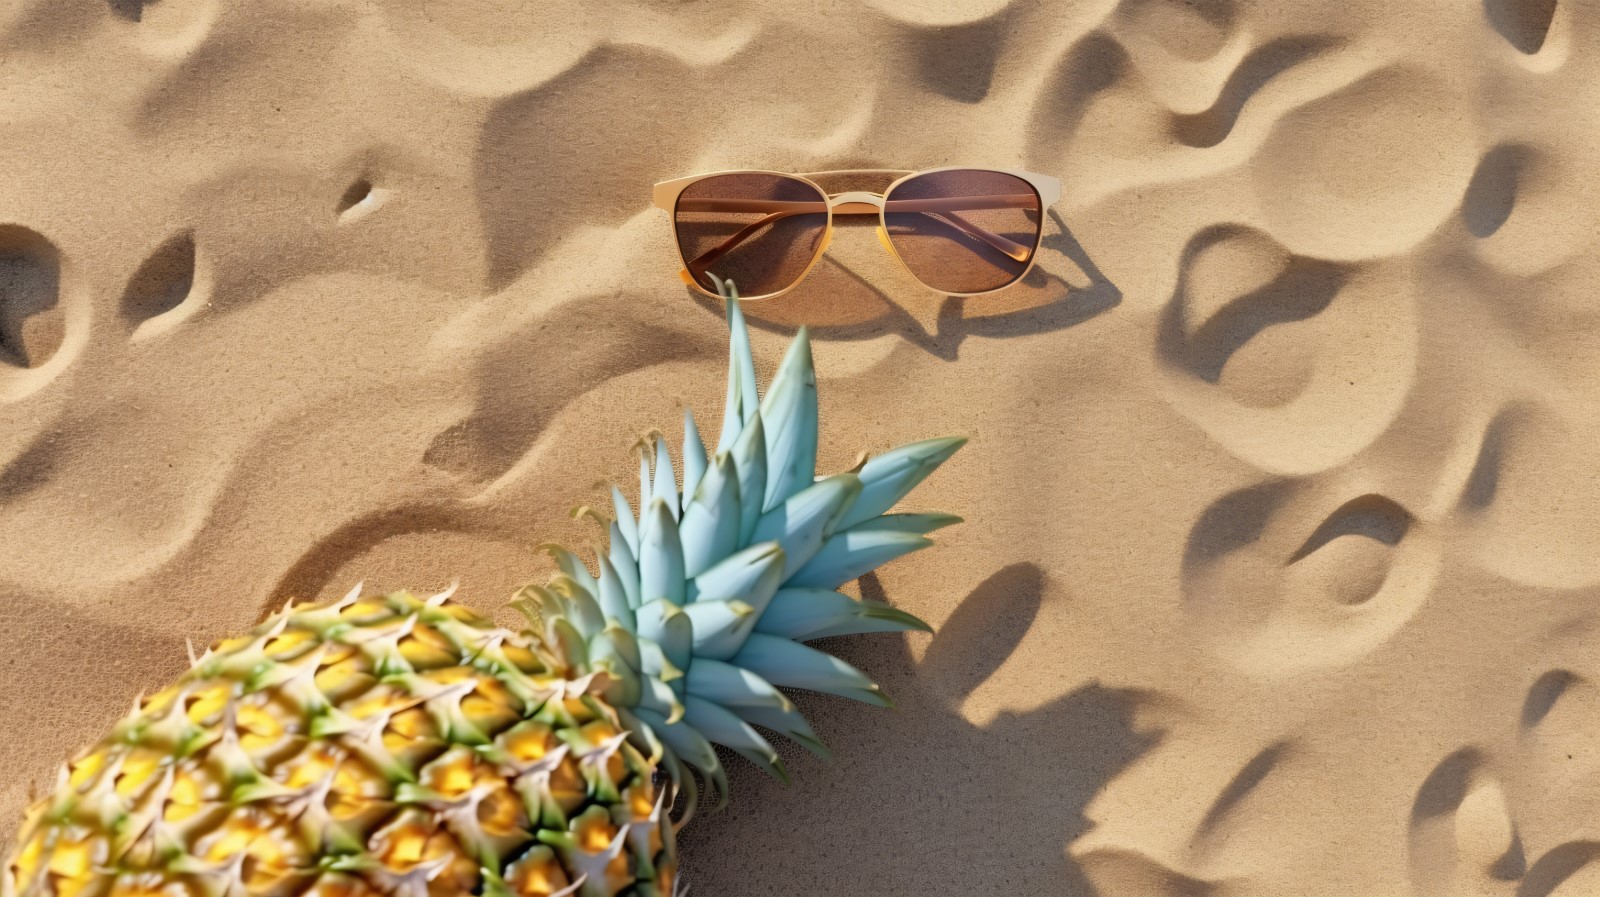 Halved pineapple and a sunglass kept on the sand 178